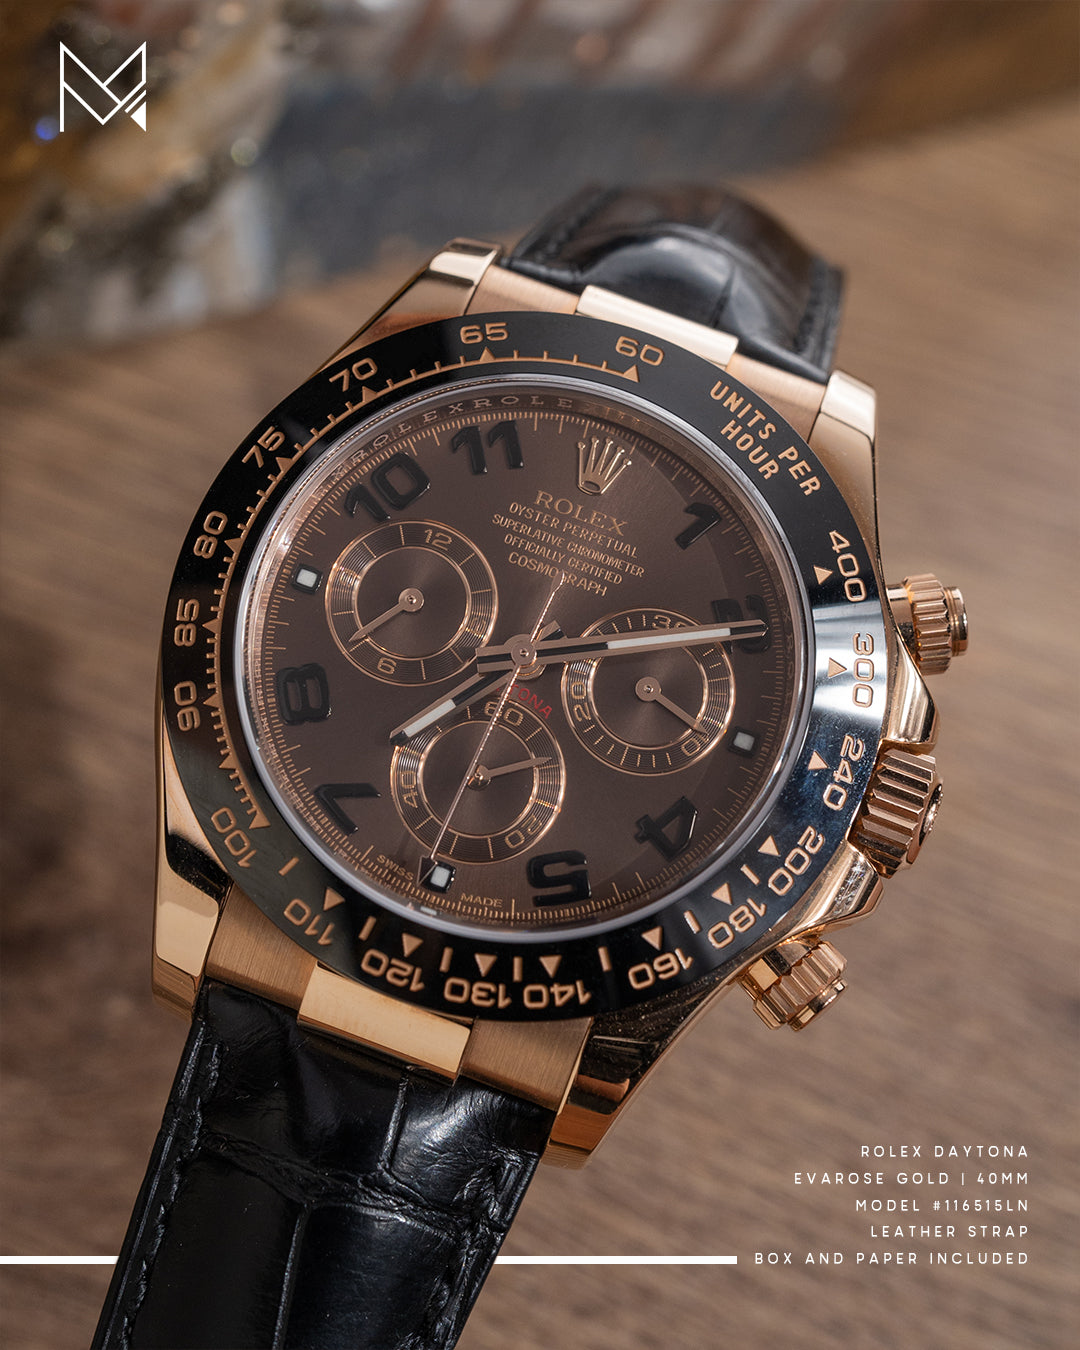 Rolex Daytona Evarose Gold 116515LN